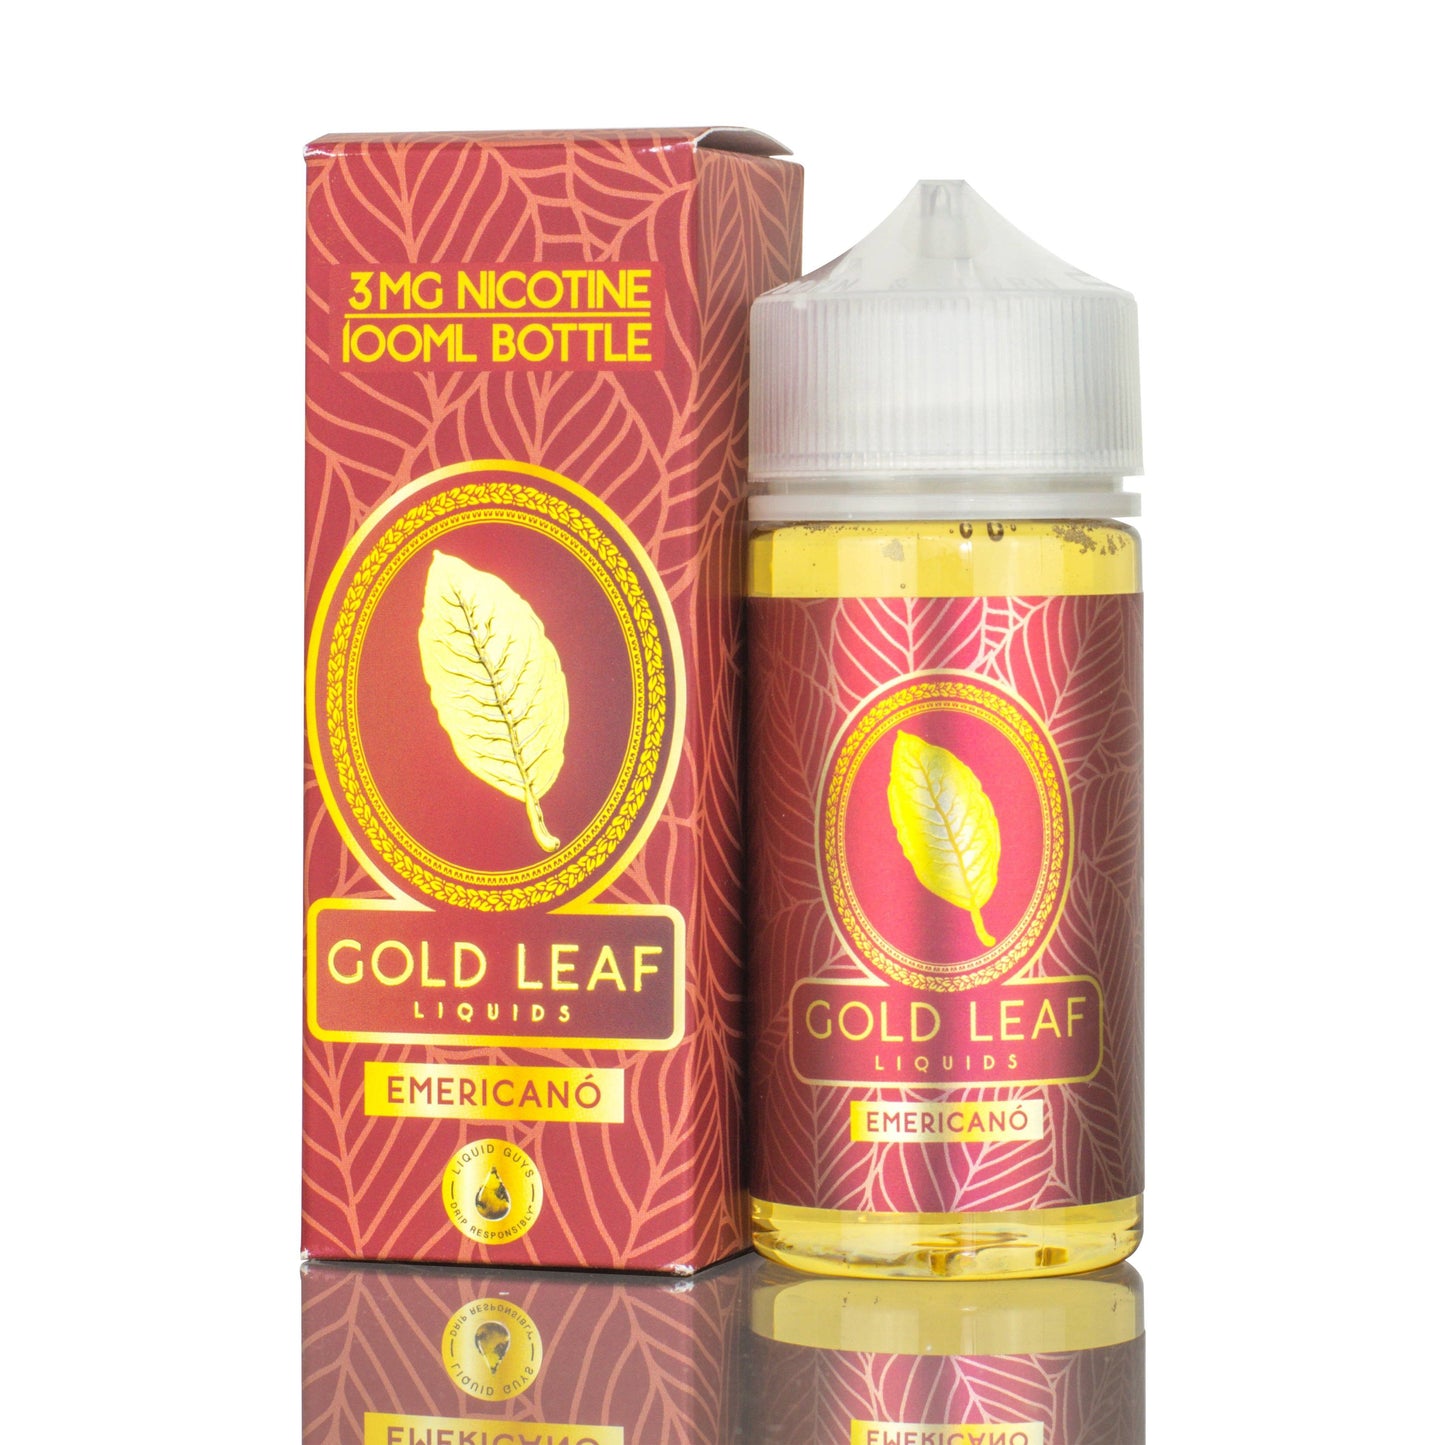 Gold Leaf Liquids | Emericano eLiquid 100mL with packaging